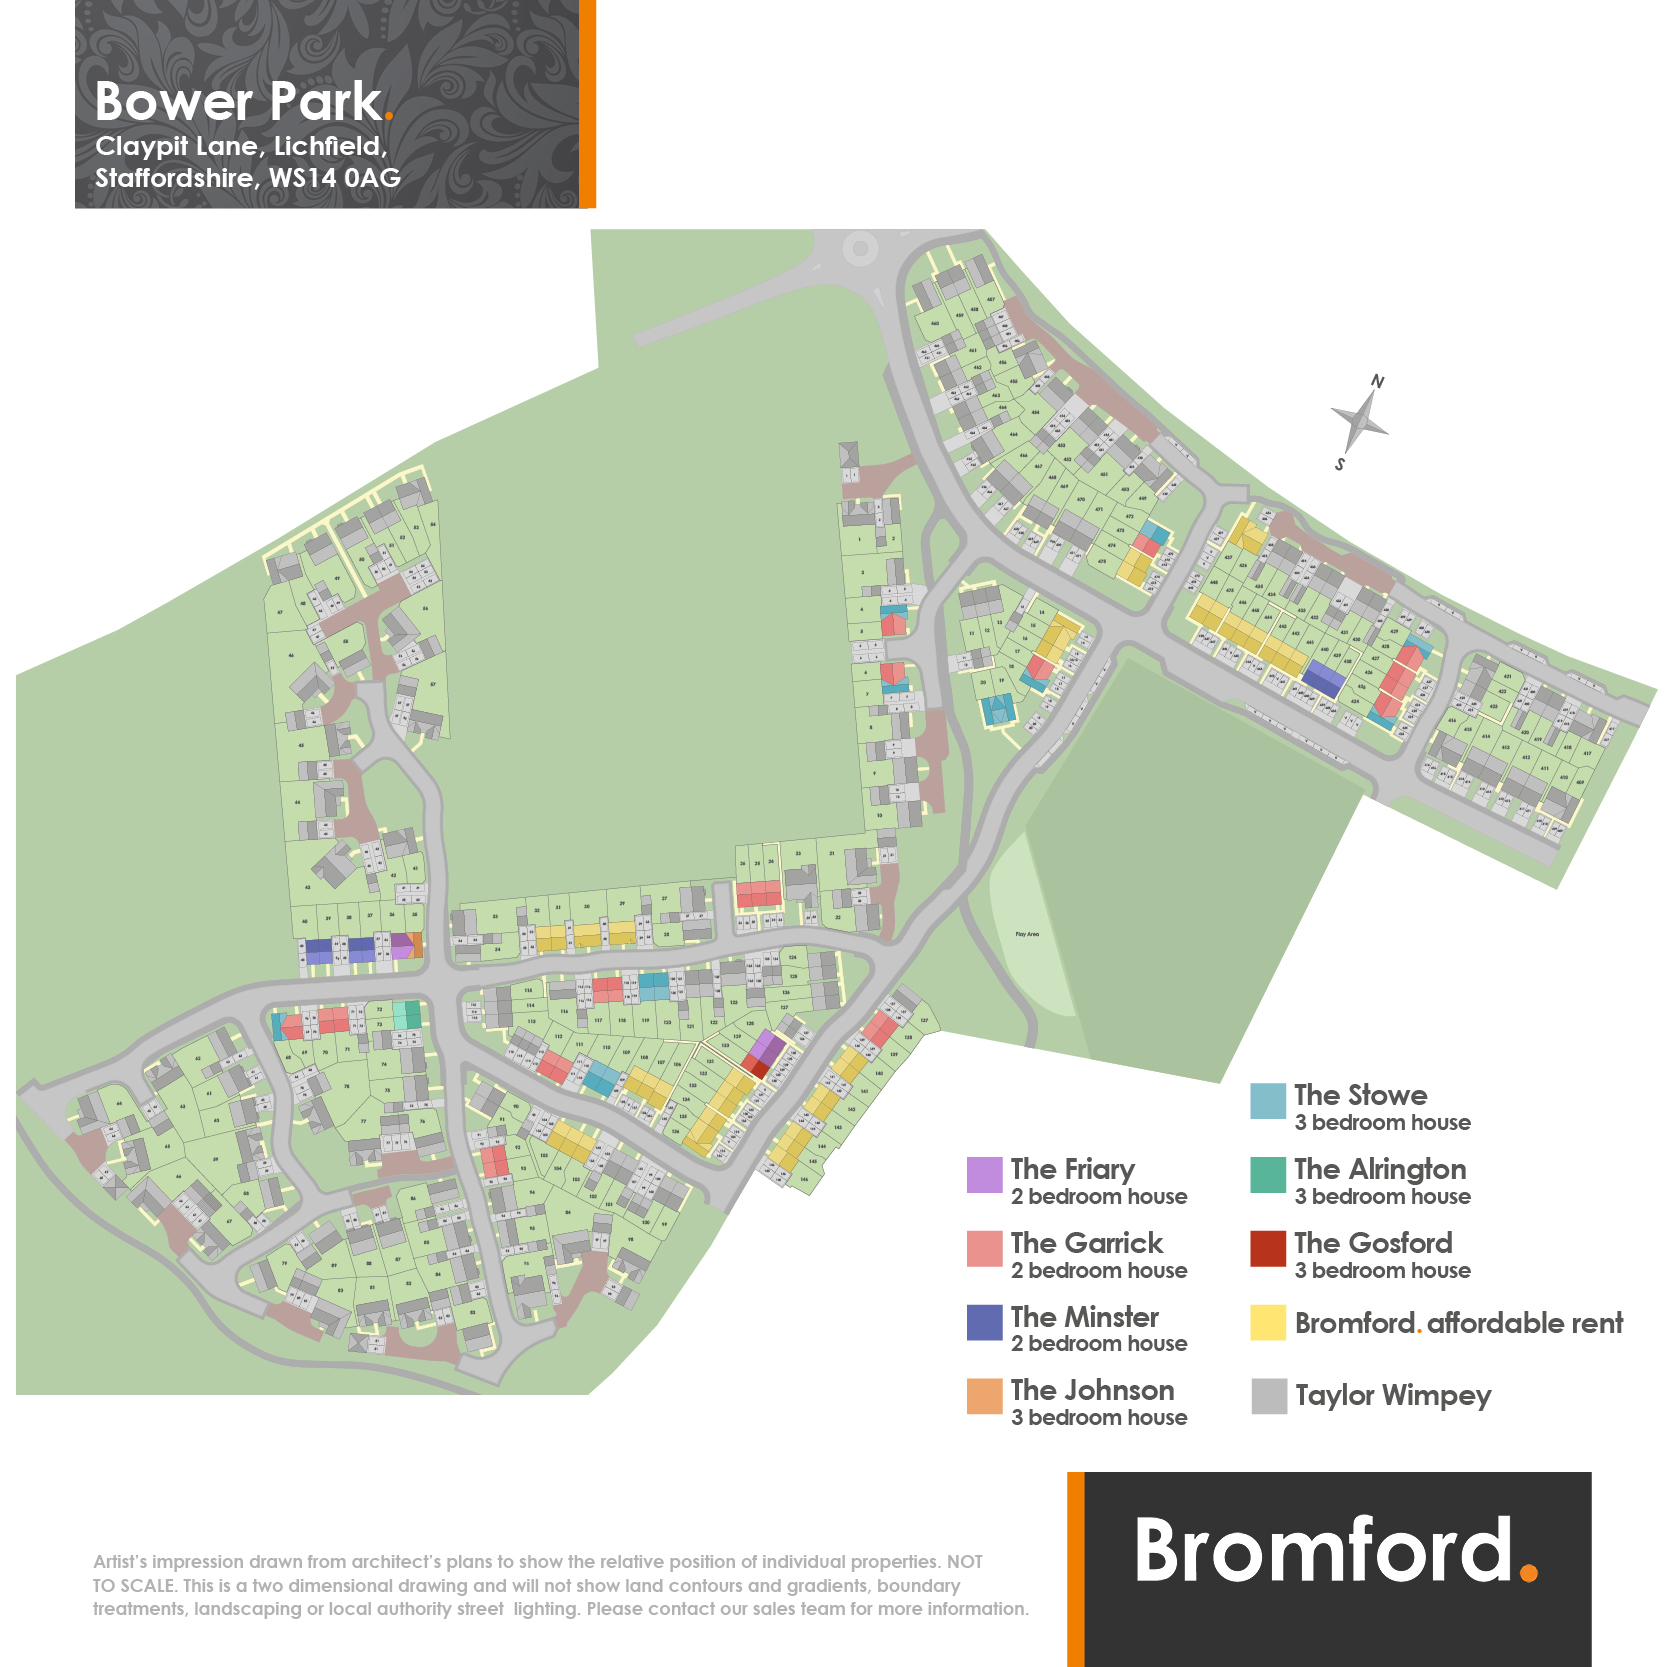 Site plan image of Bower Park